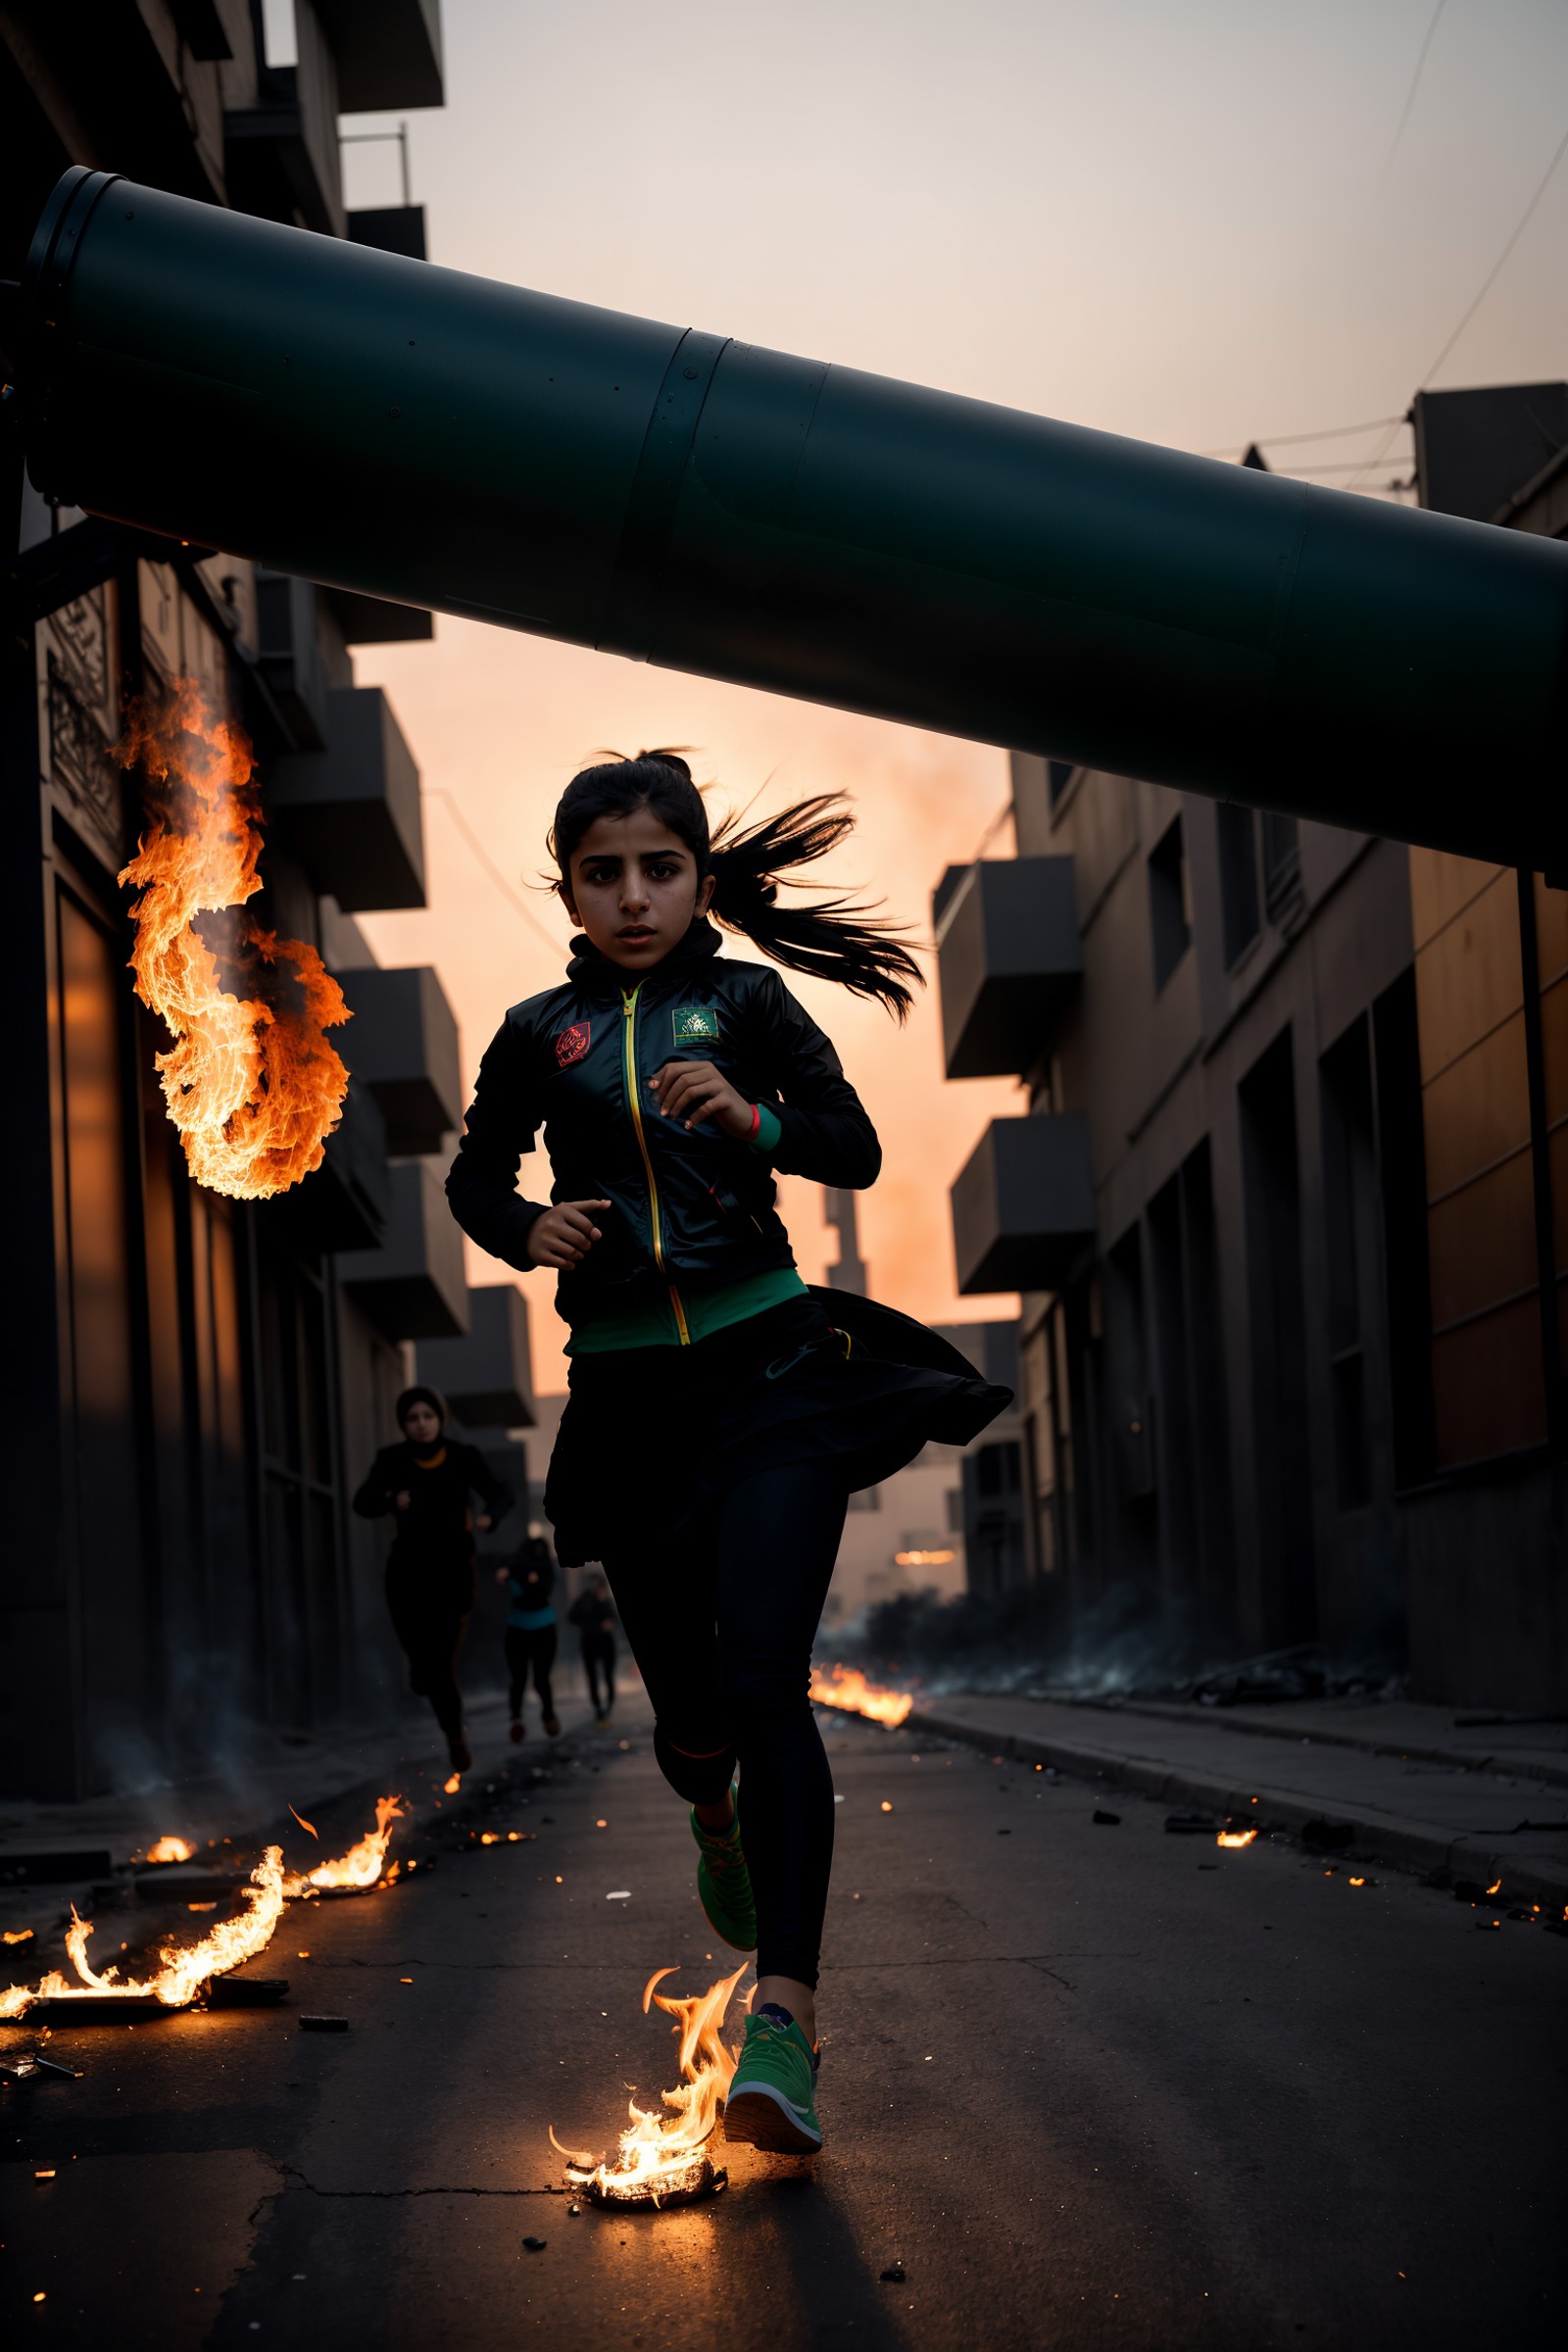 Medium format dark aesthetic photo, (Iranian girl running:1.3), Chaotic street protest, Tense atmosphere, (Flames lighting...